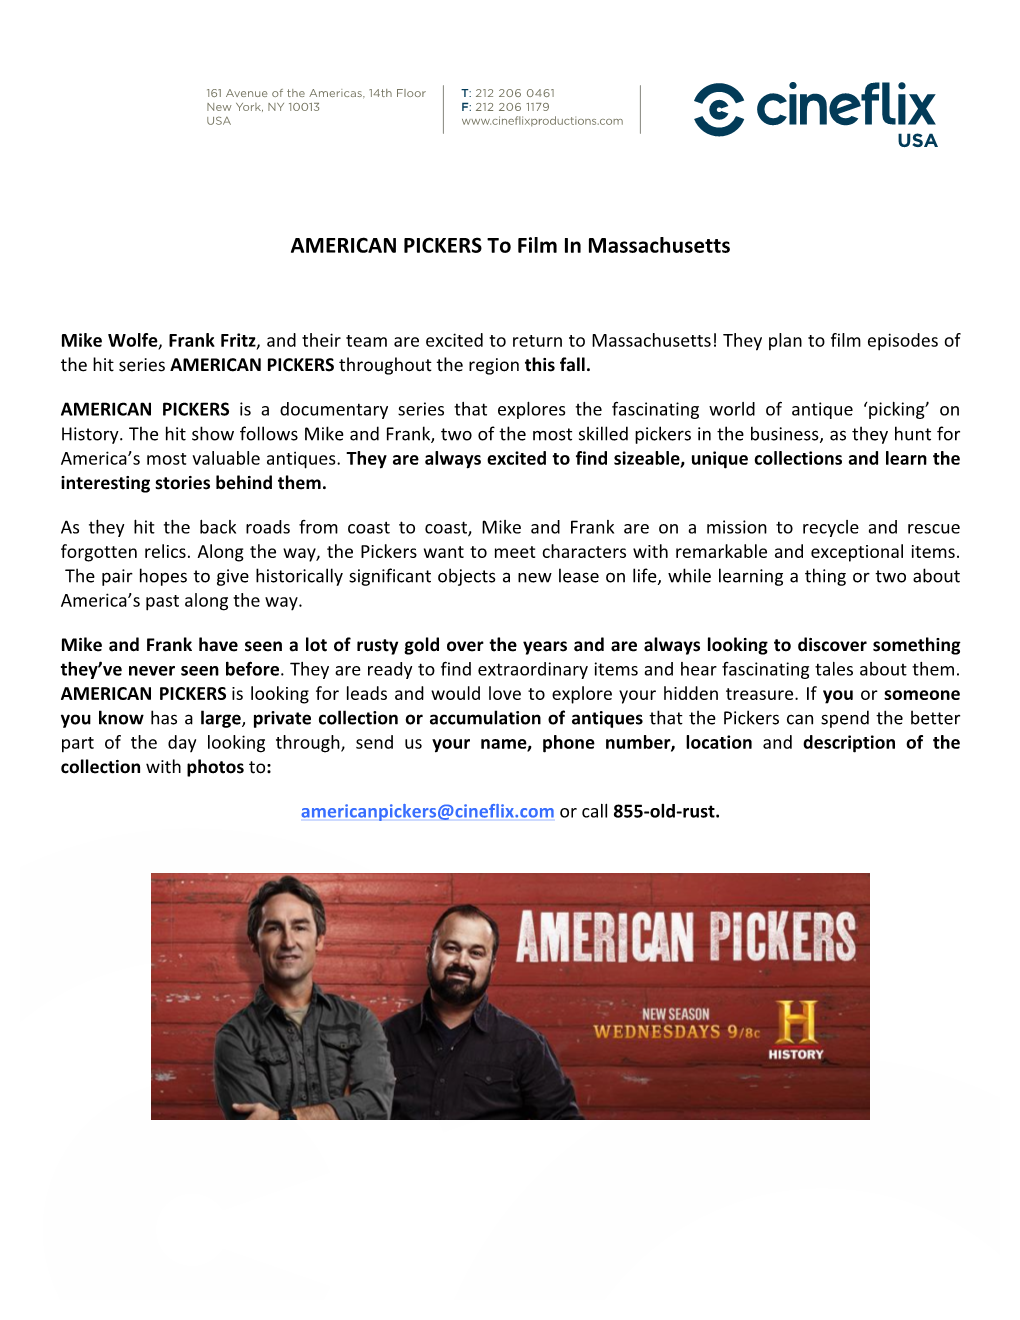 American Pickers Press Release